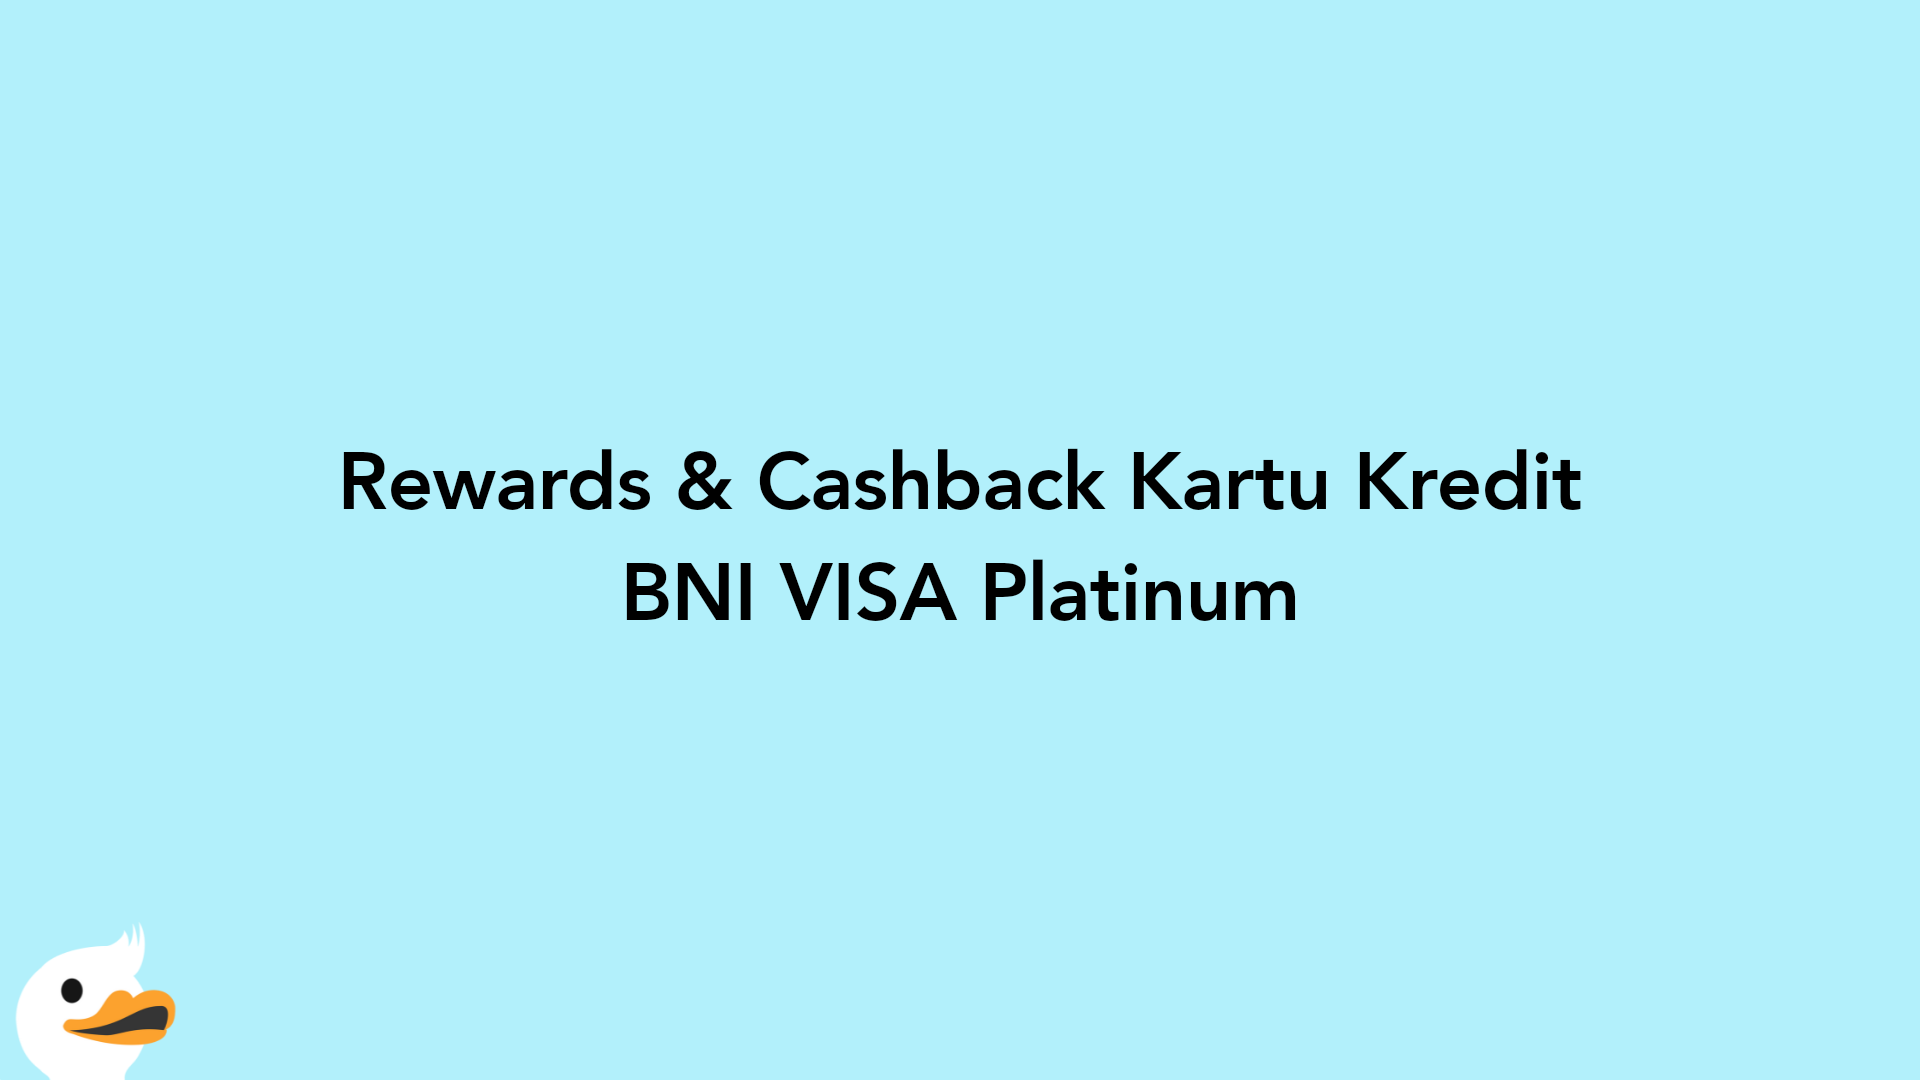 Rewards & Cashback Kartu Kredit BNI VISA Platinum